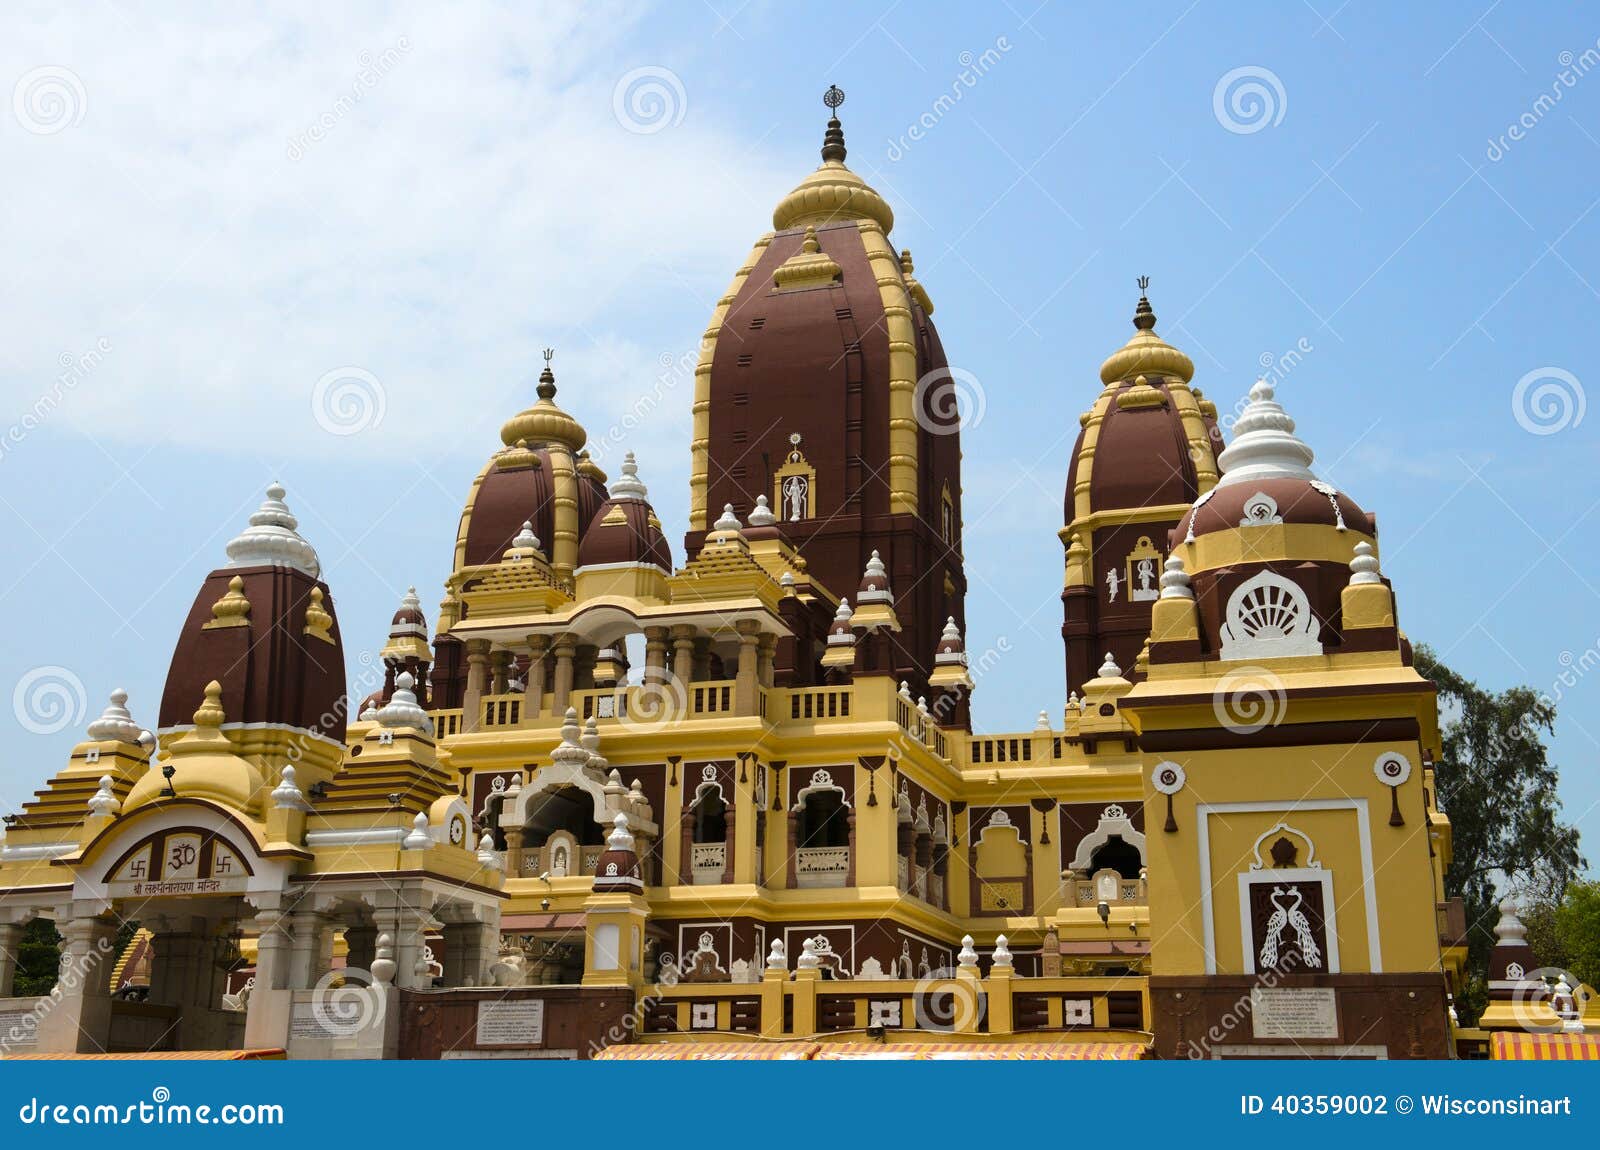 birla mandir hindu temple, new delhi, travel to india